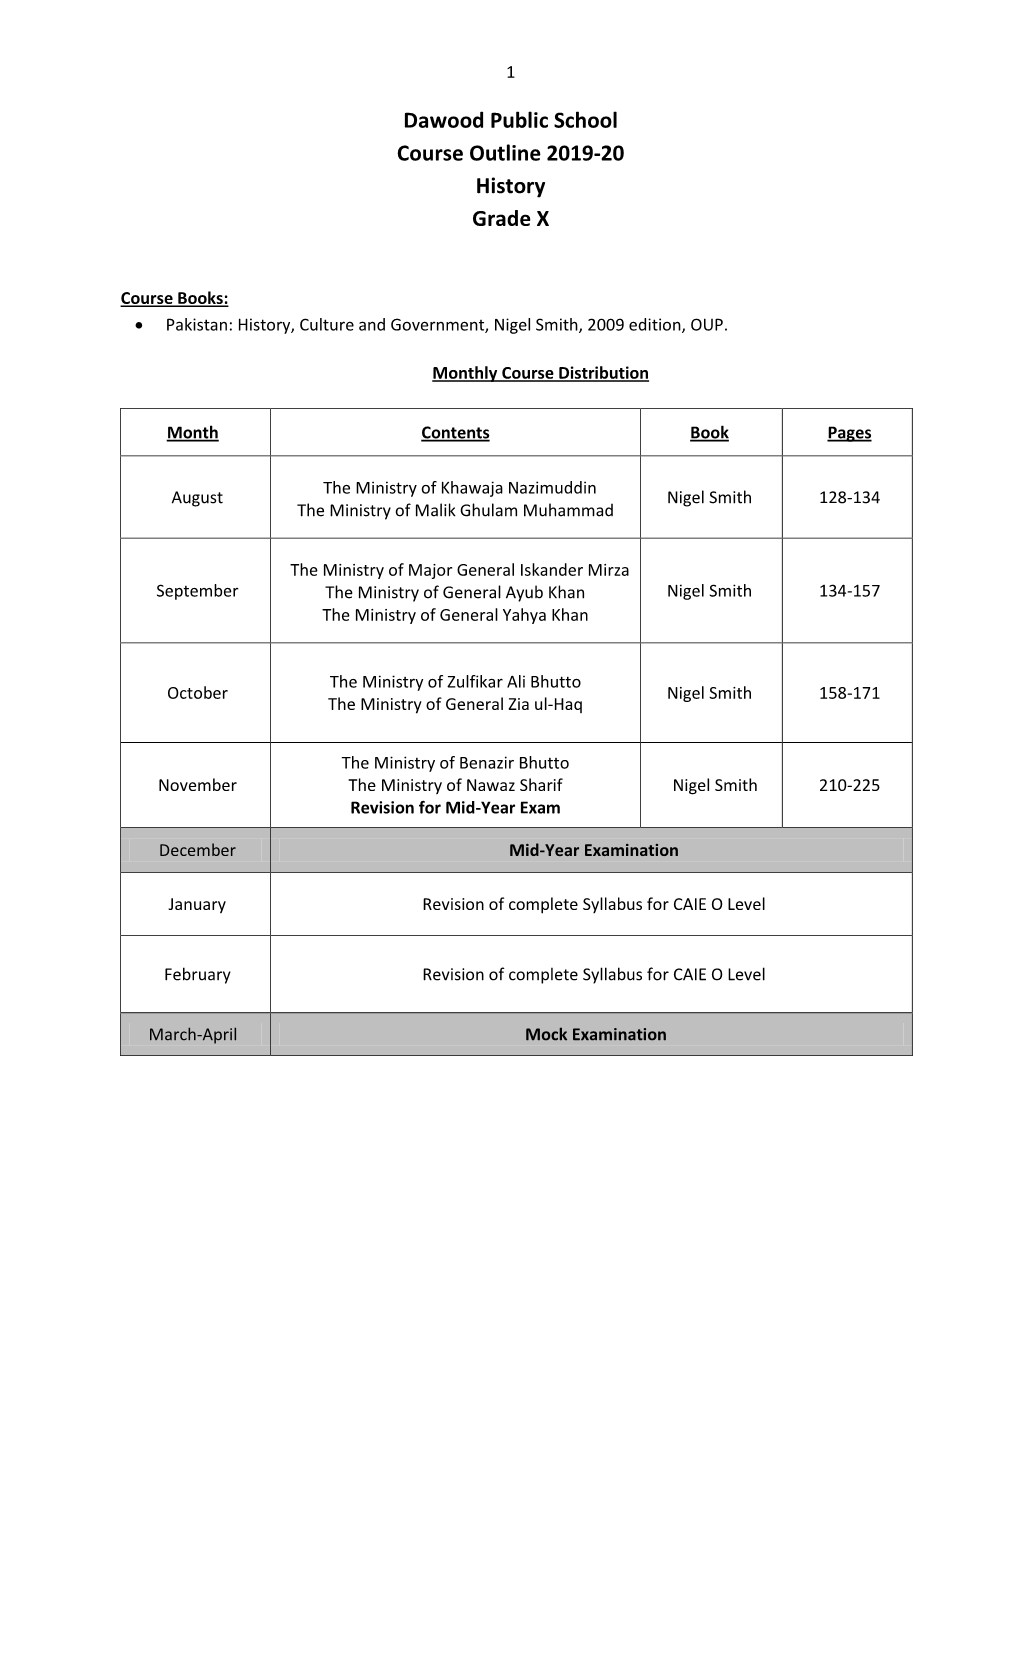 Dawood Public School Course Outline 2019-20 History Grade X